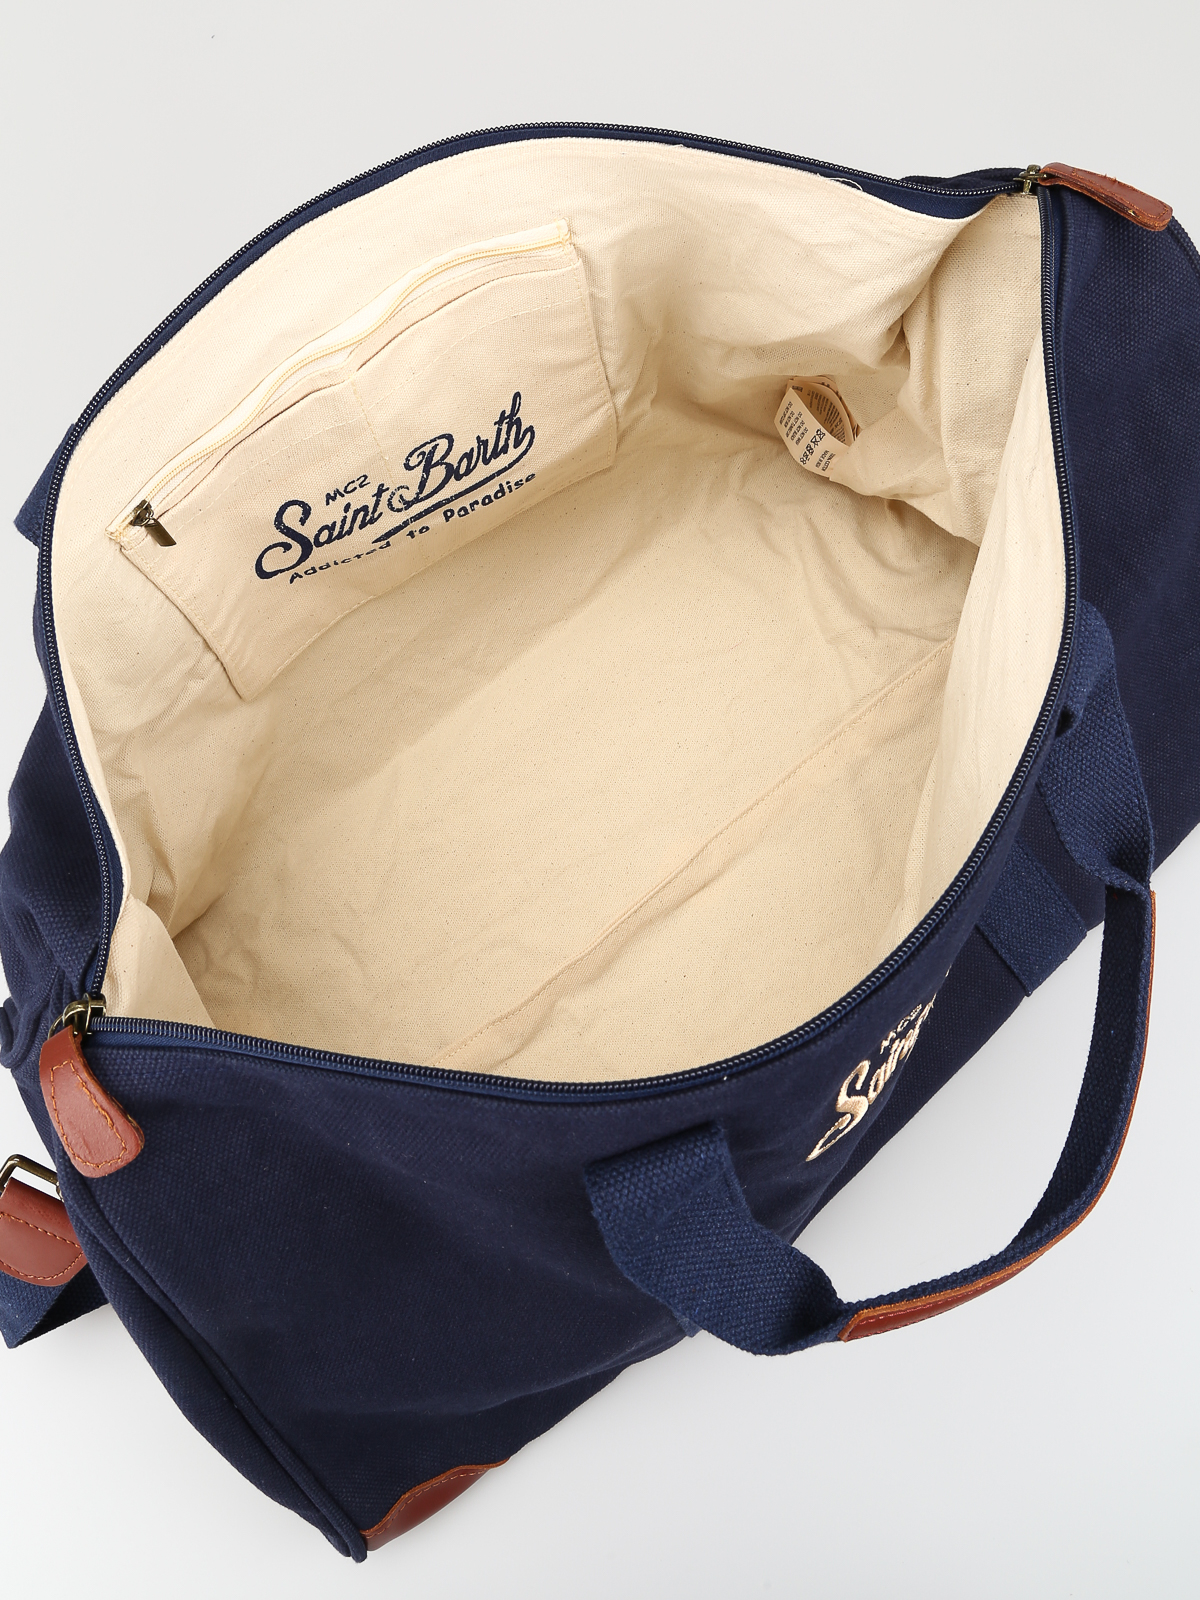 Mc2 Saint Barth - Jet Lag navy blue canvas duffle bag - Luggage & Travel bags - JETLEG61